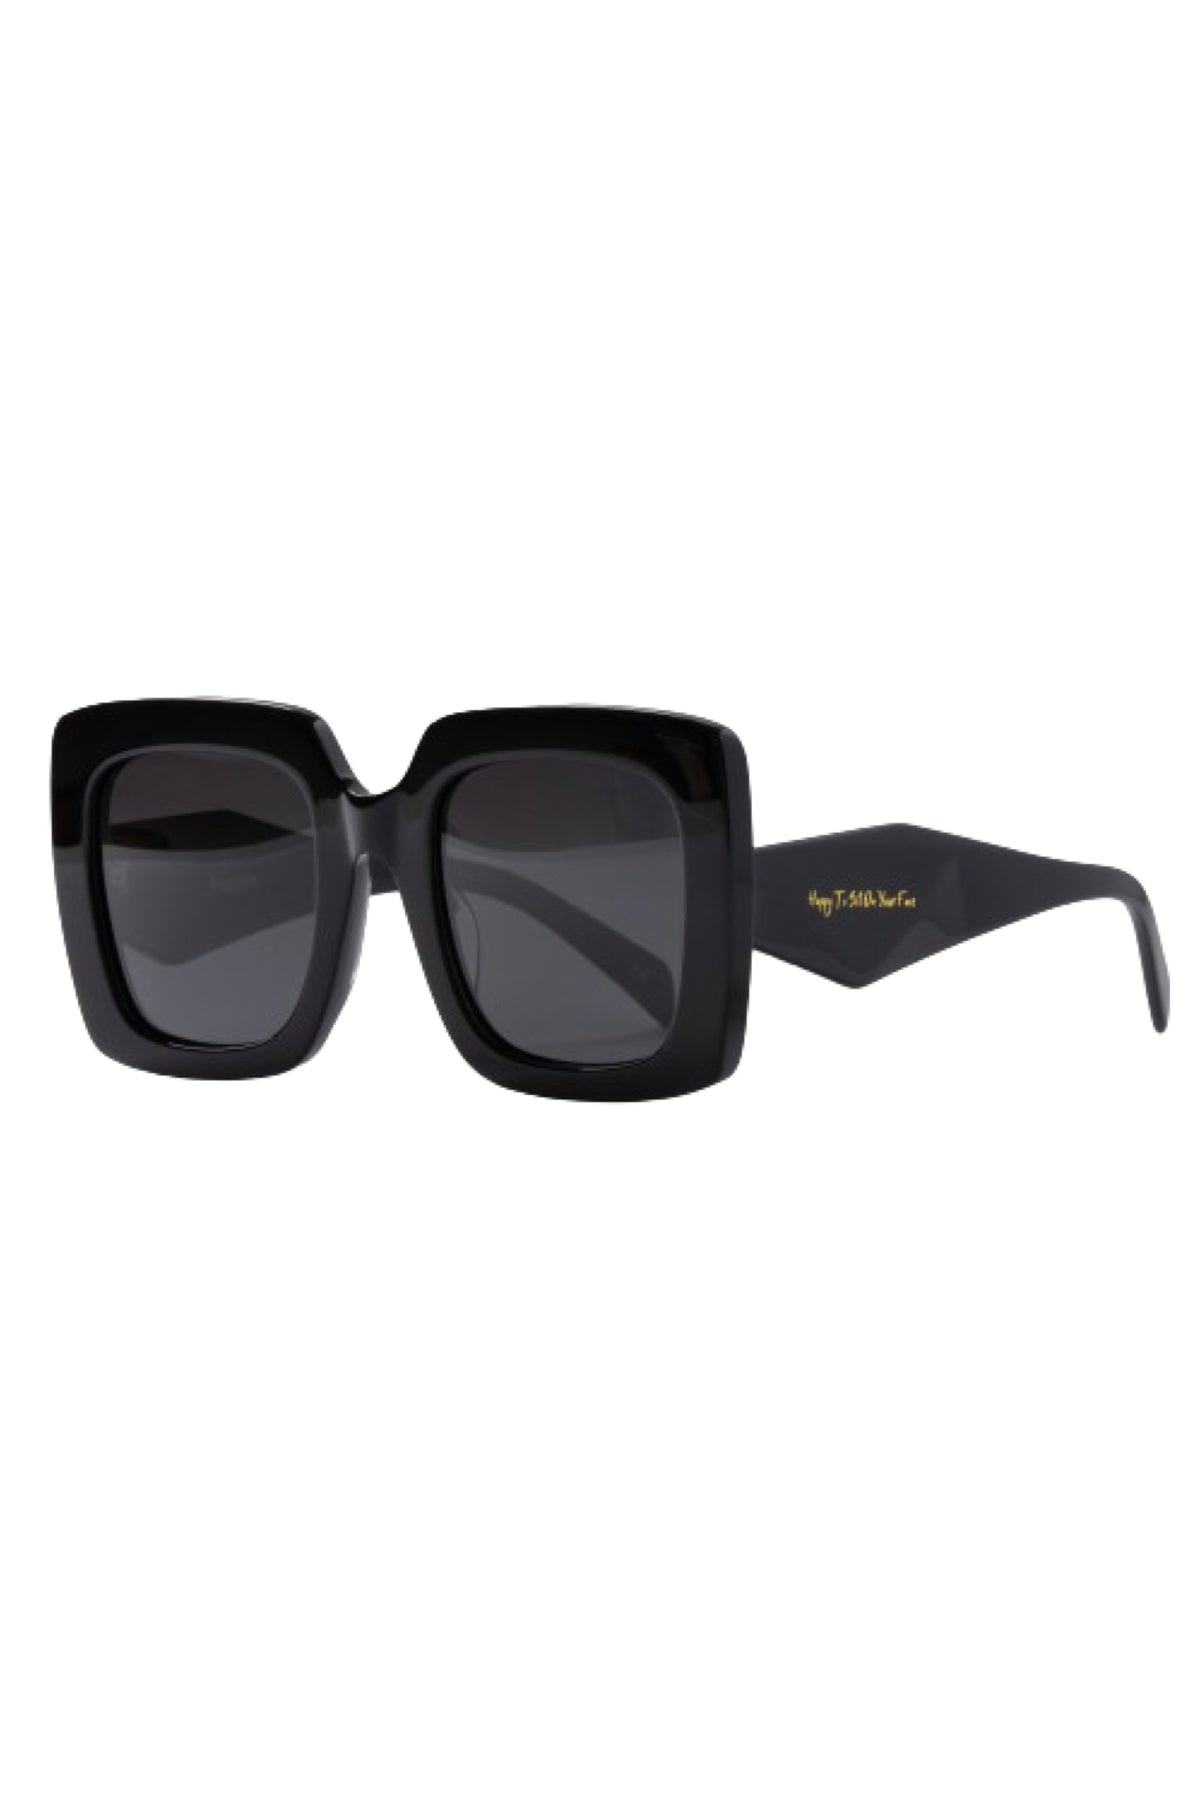 Popcorn Noir Sunglasses